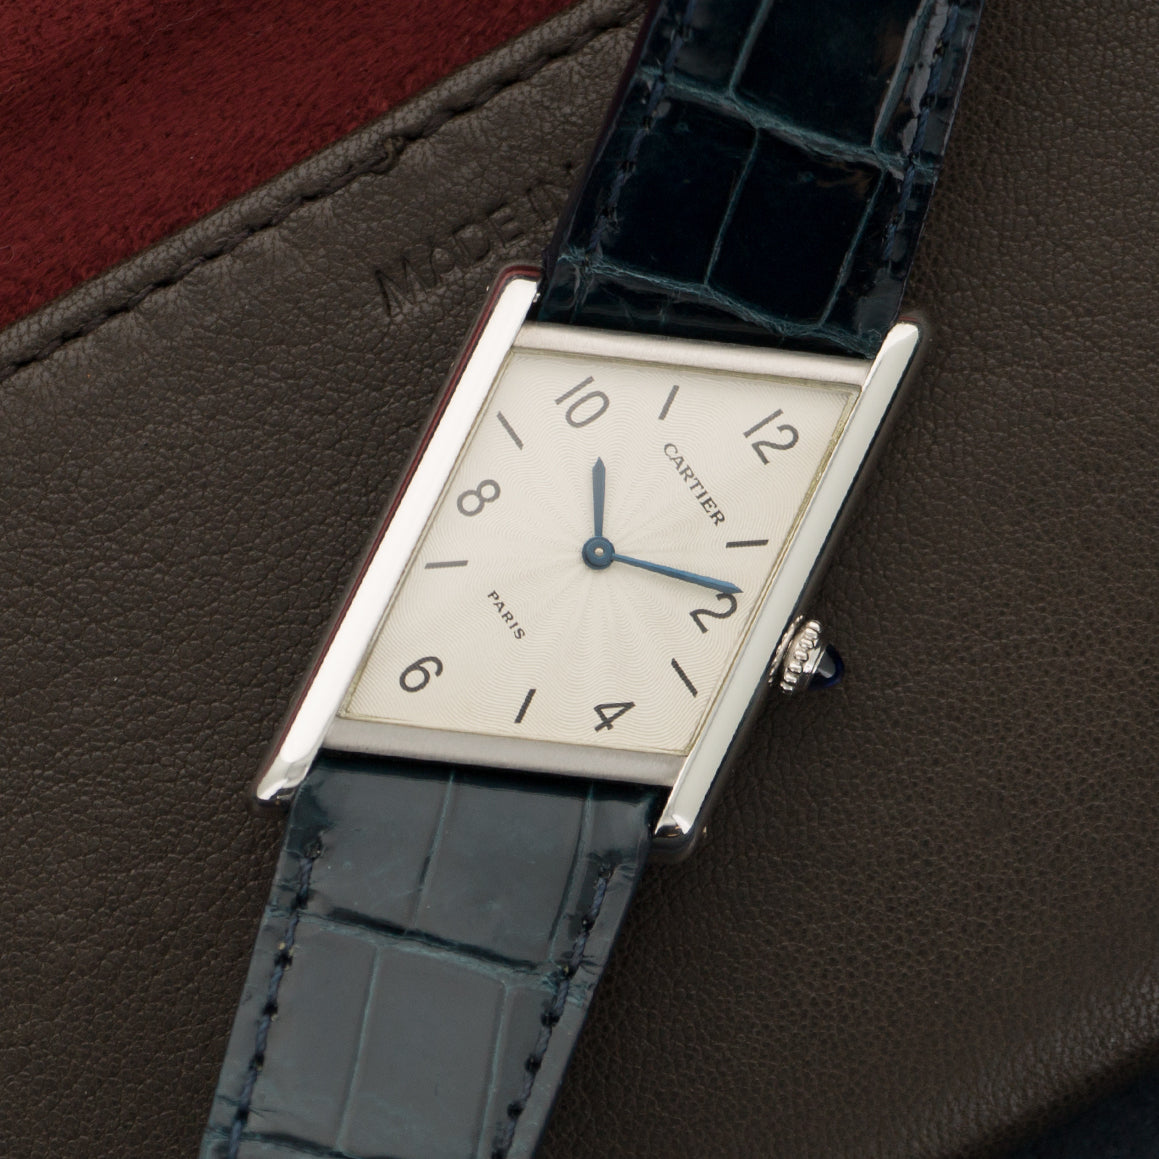 Cartier - Cartier Platinum Asymmetric Tank Limited Edition Watch, Ref. 2488 - The Keystone Watches